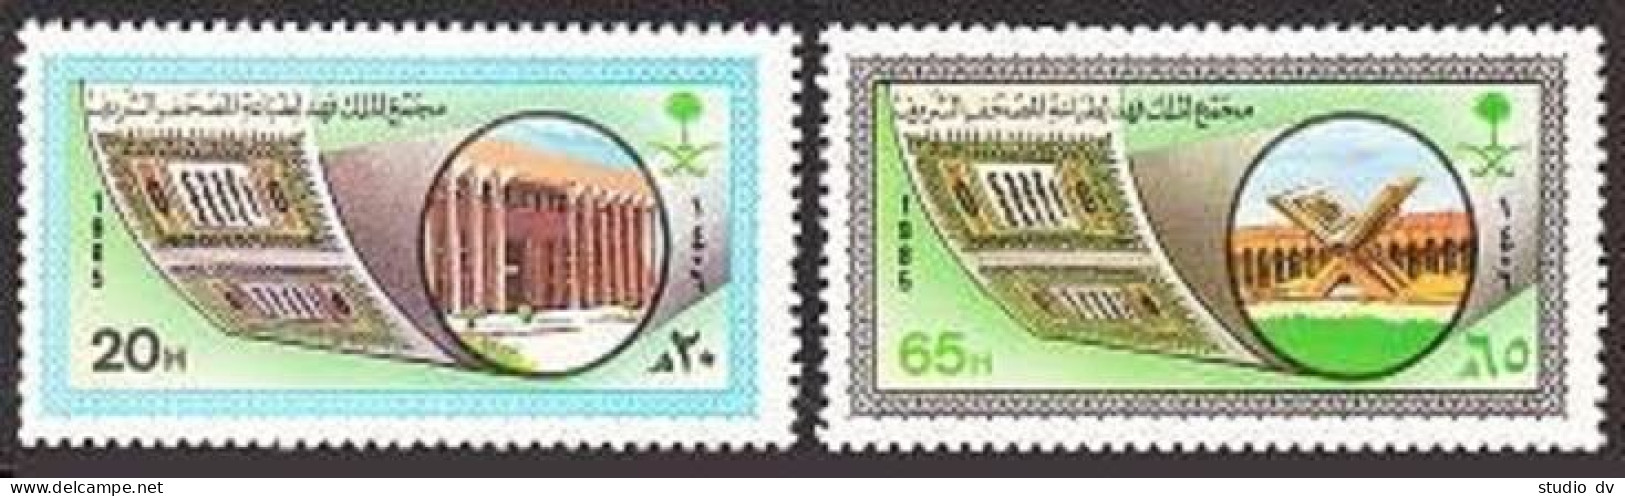 Saudi Arabia 957-958,MNH.Michel 830-831. Koran Publishing Center,Medina,1985. - Saudi-Arabien